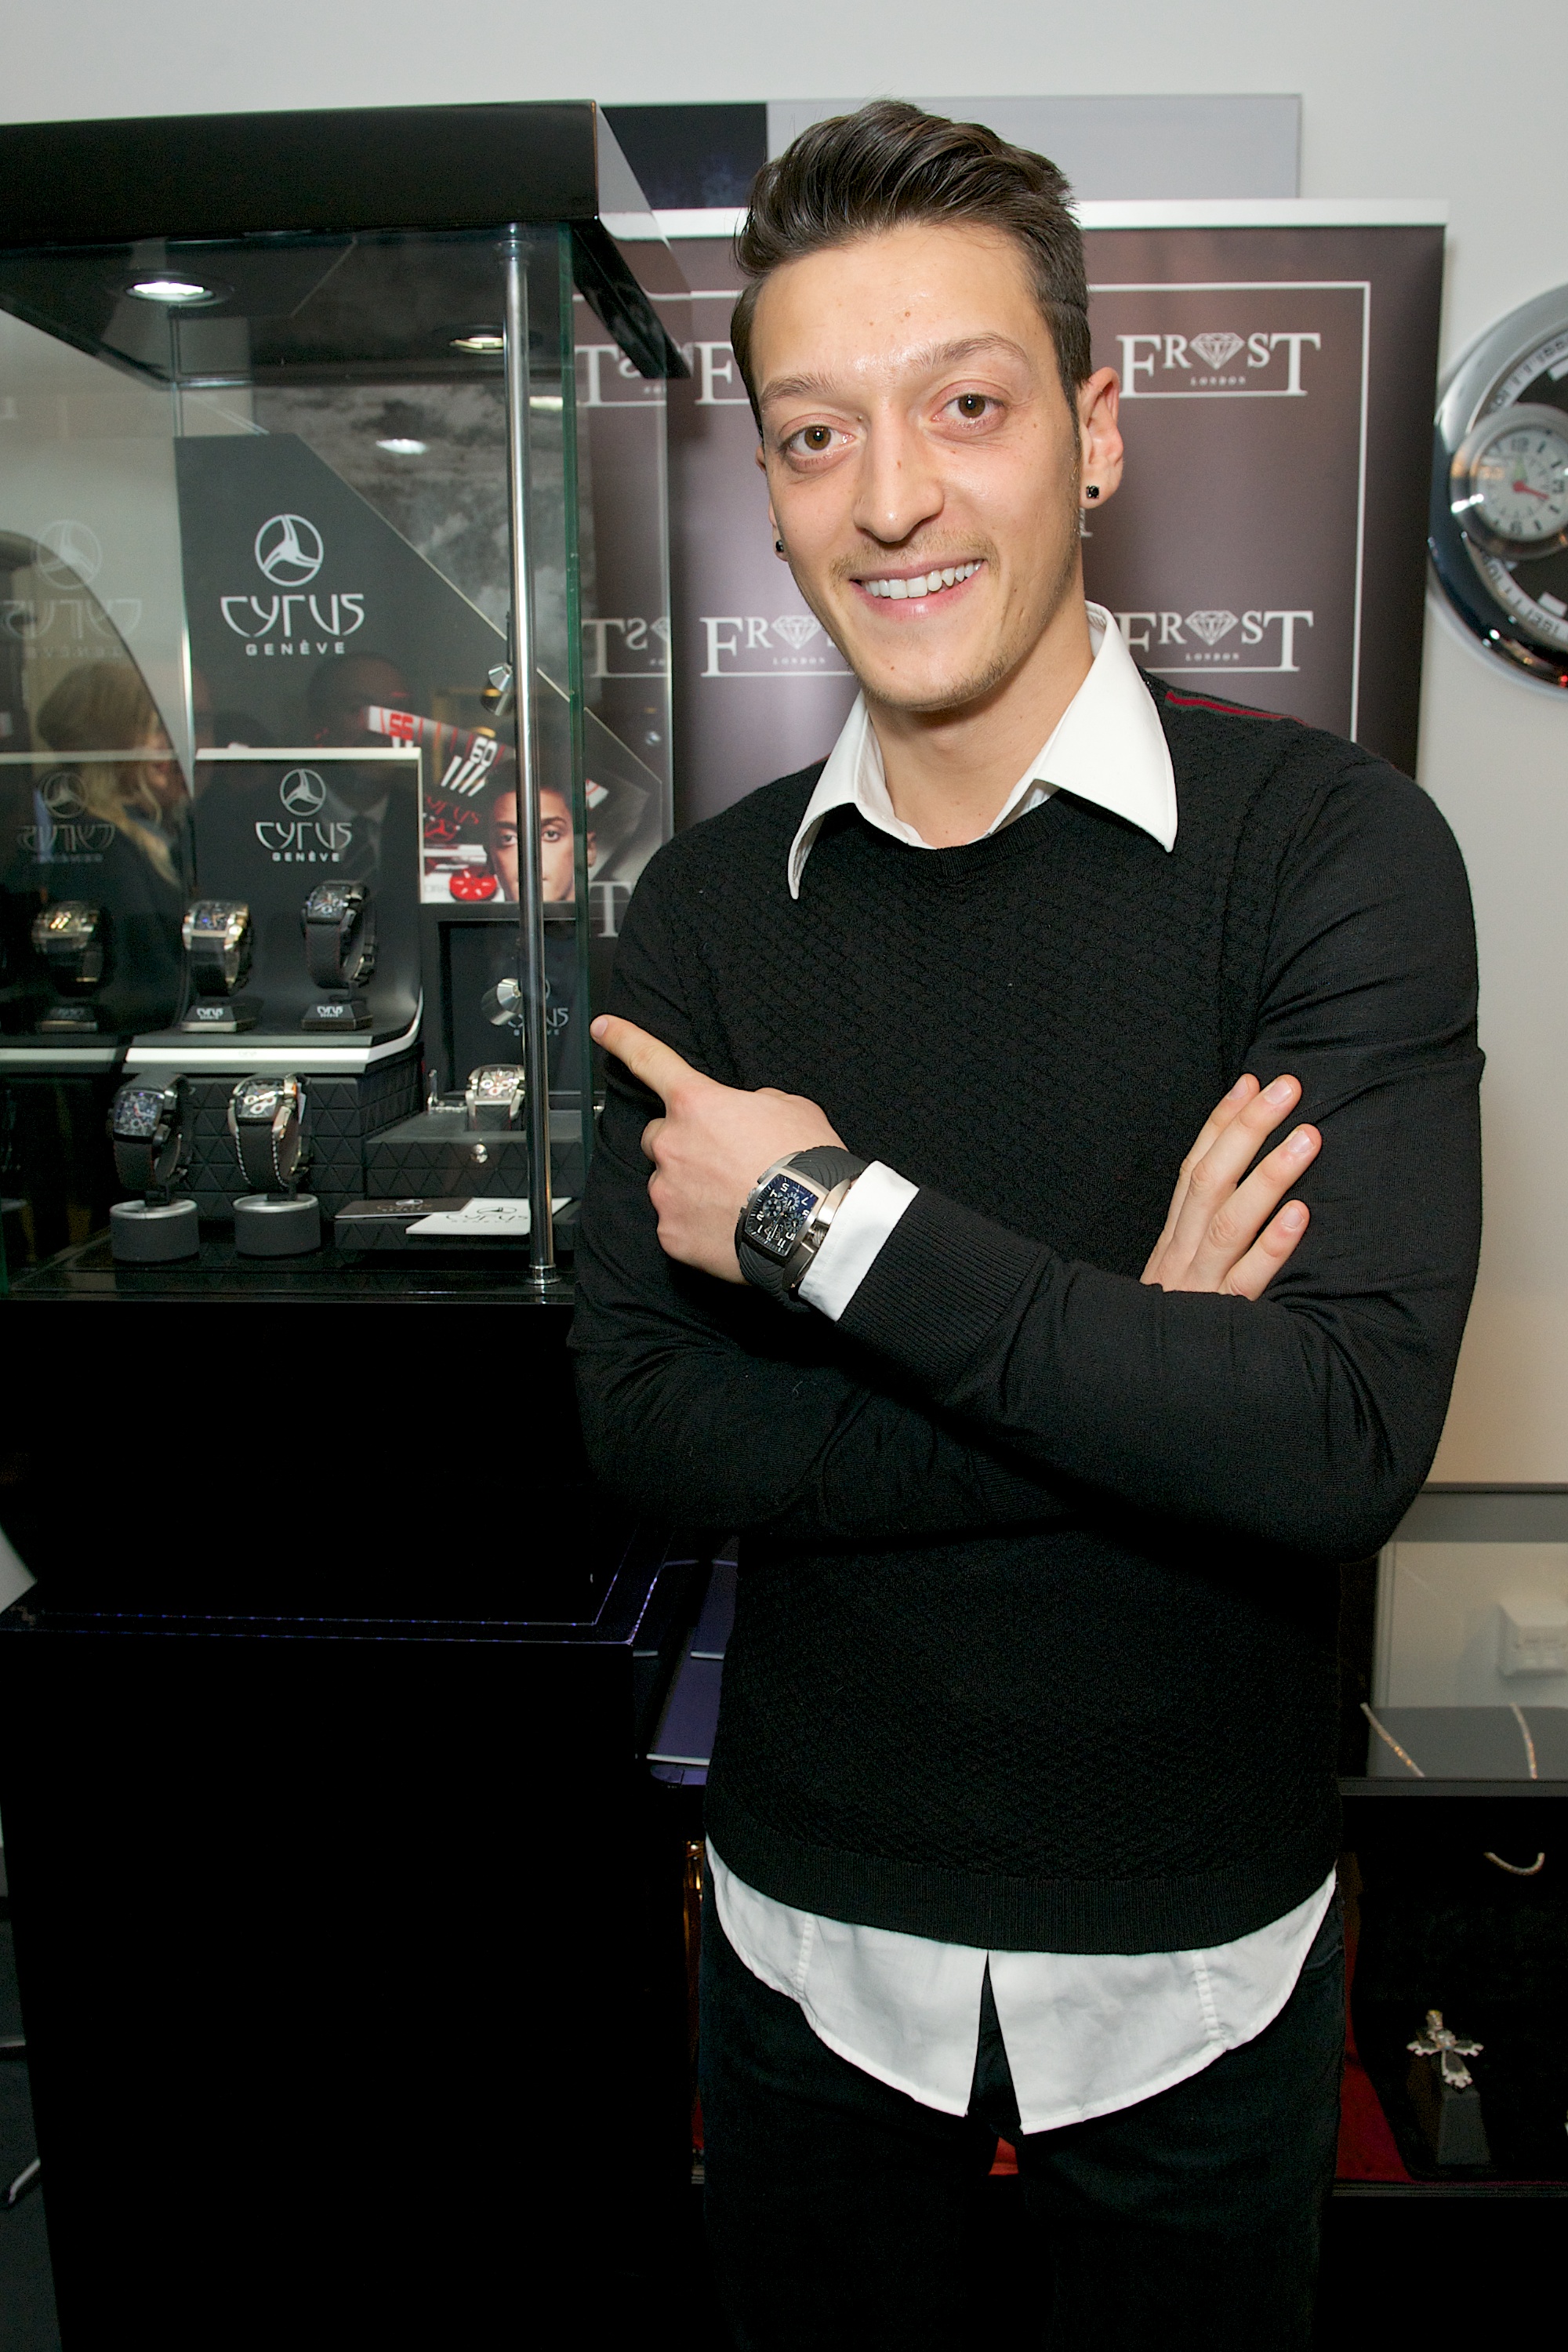 Mesut Özil, ambassador of Cyrus watches